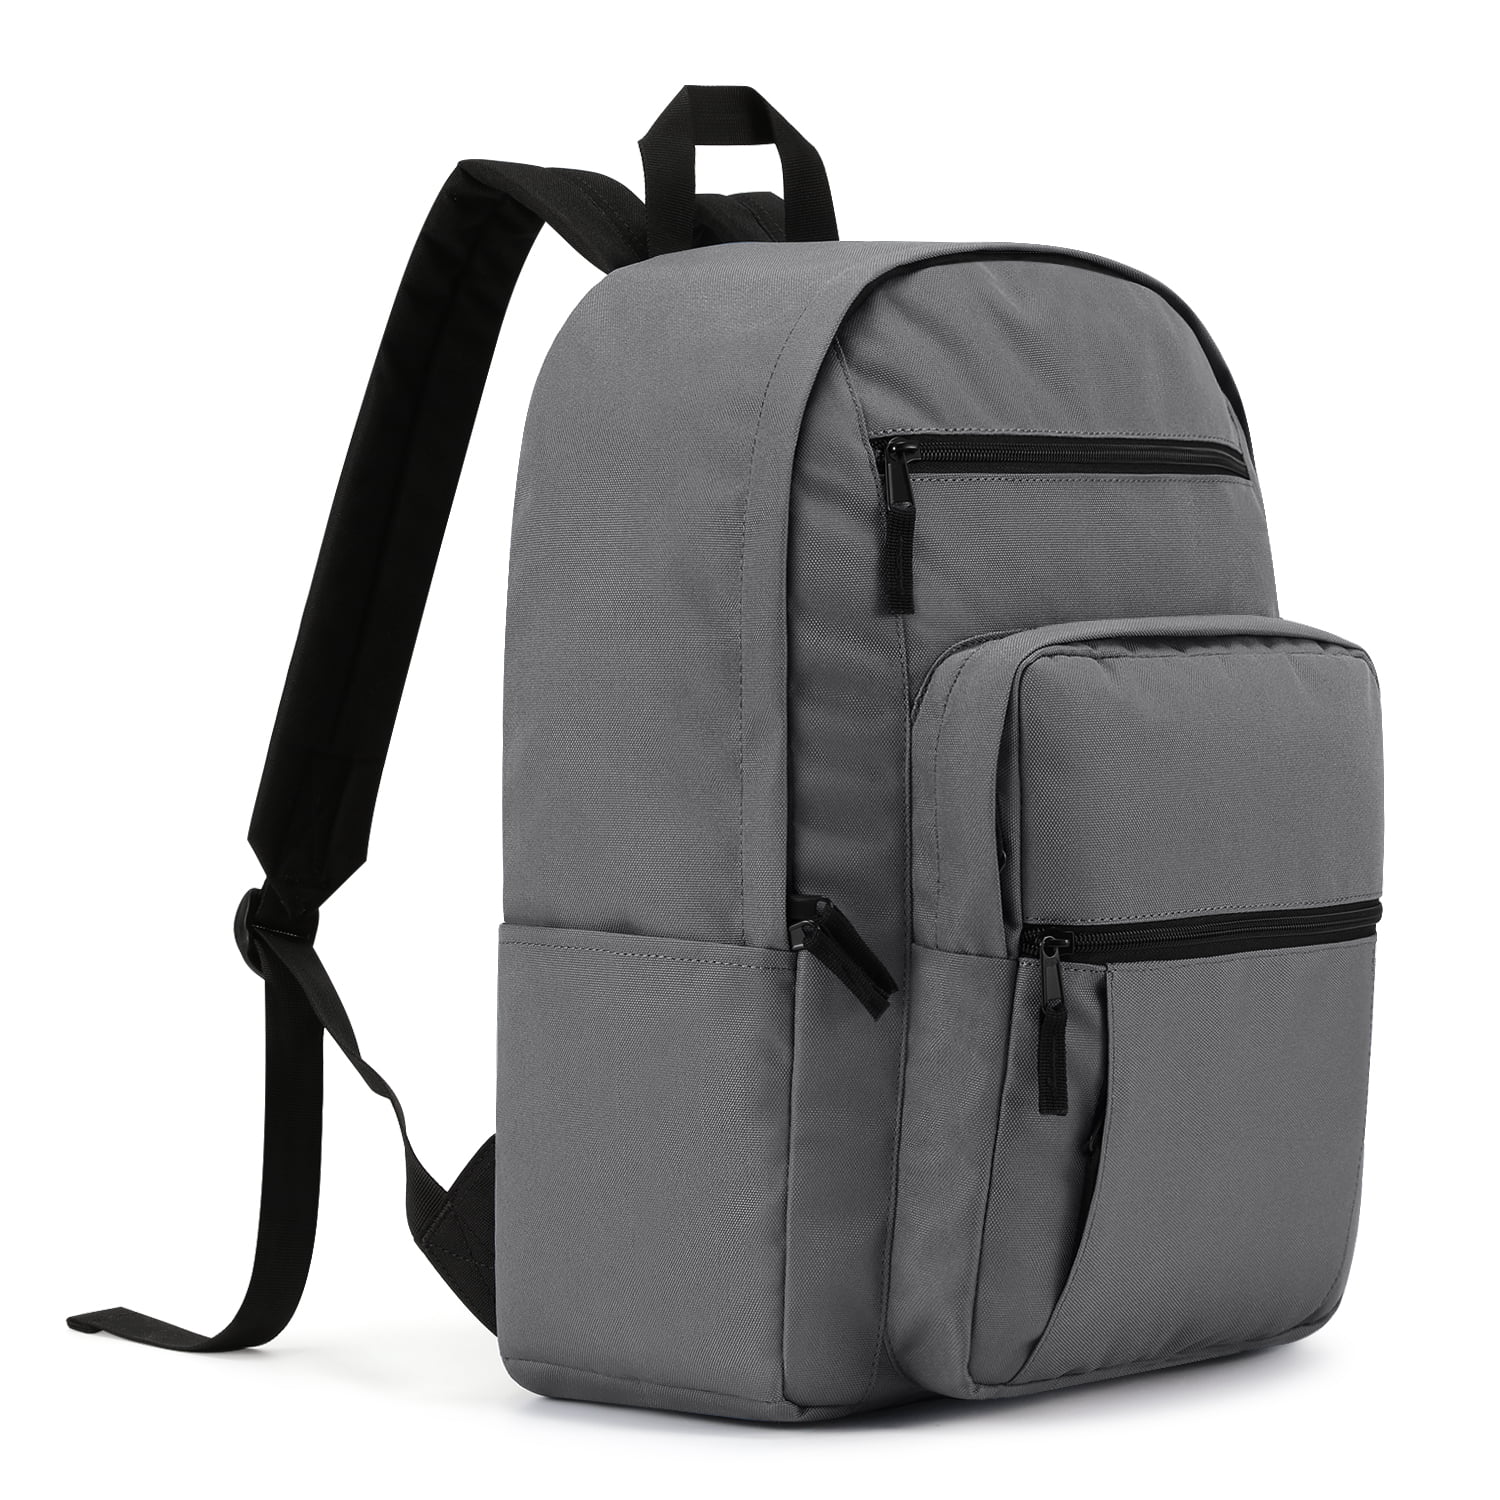 Lightweight Laptop Backpack Colorful Mandala Waterproof Rucksack,School Bag for Children//Boys//Girls 13x11x6.3